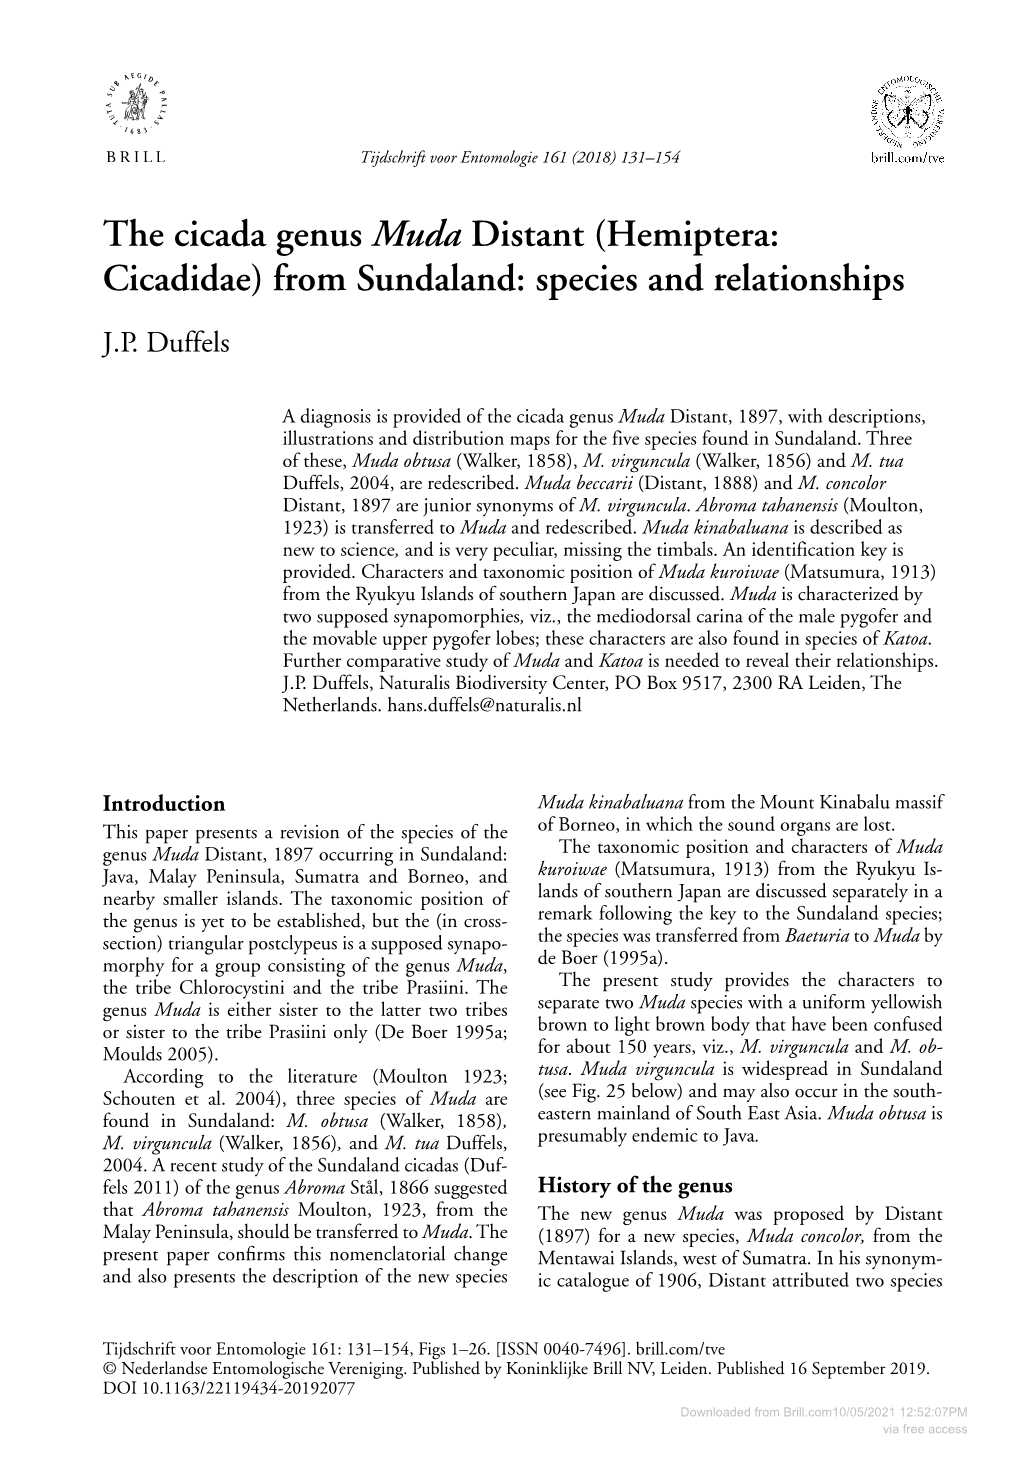 The Cicada Genus Muda Distant (Hemiptera: Cicadidae) from Sundaland: Species and Relationships J.P